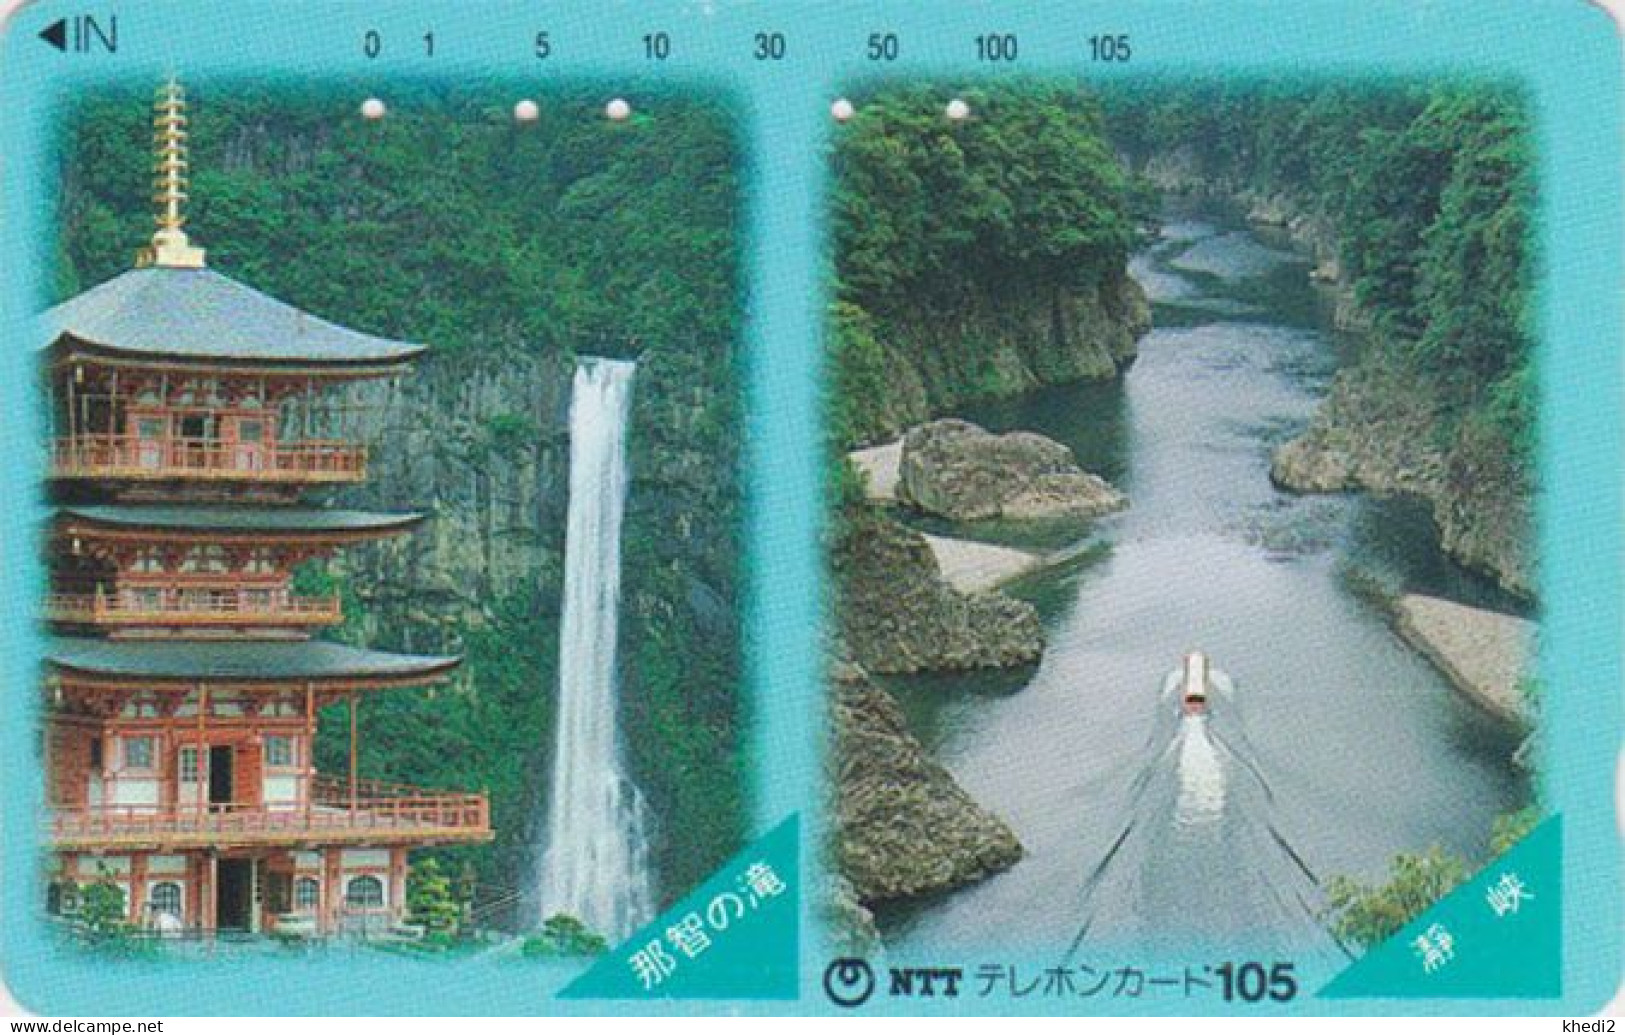 Télécarte JAPON / NTT 330-087 A VERSO KDD - PAGODE CASCADE BATEAU - CASTLE WATERFALL SHIP - JAPAN Phonecard - Japan